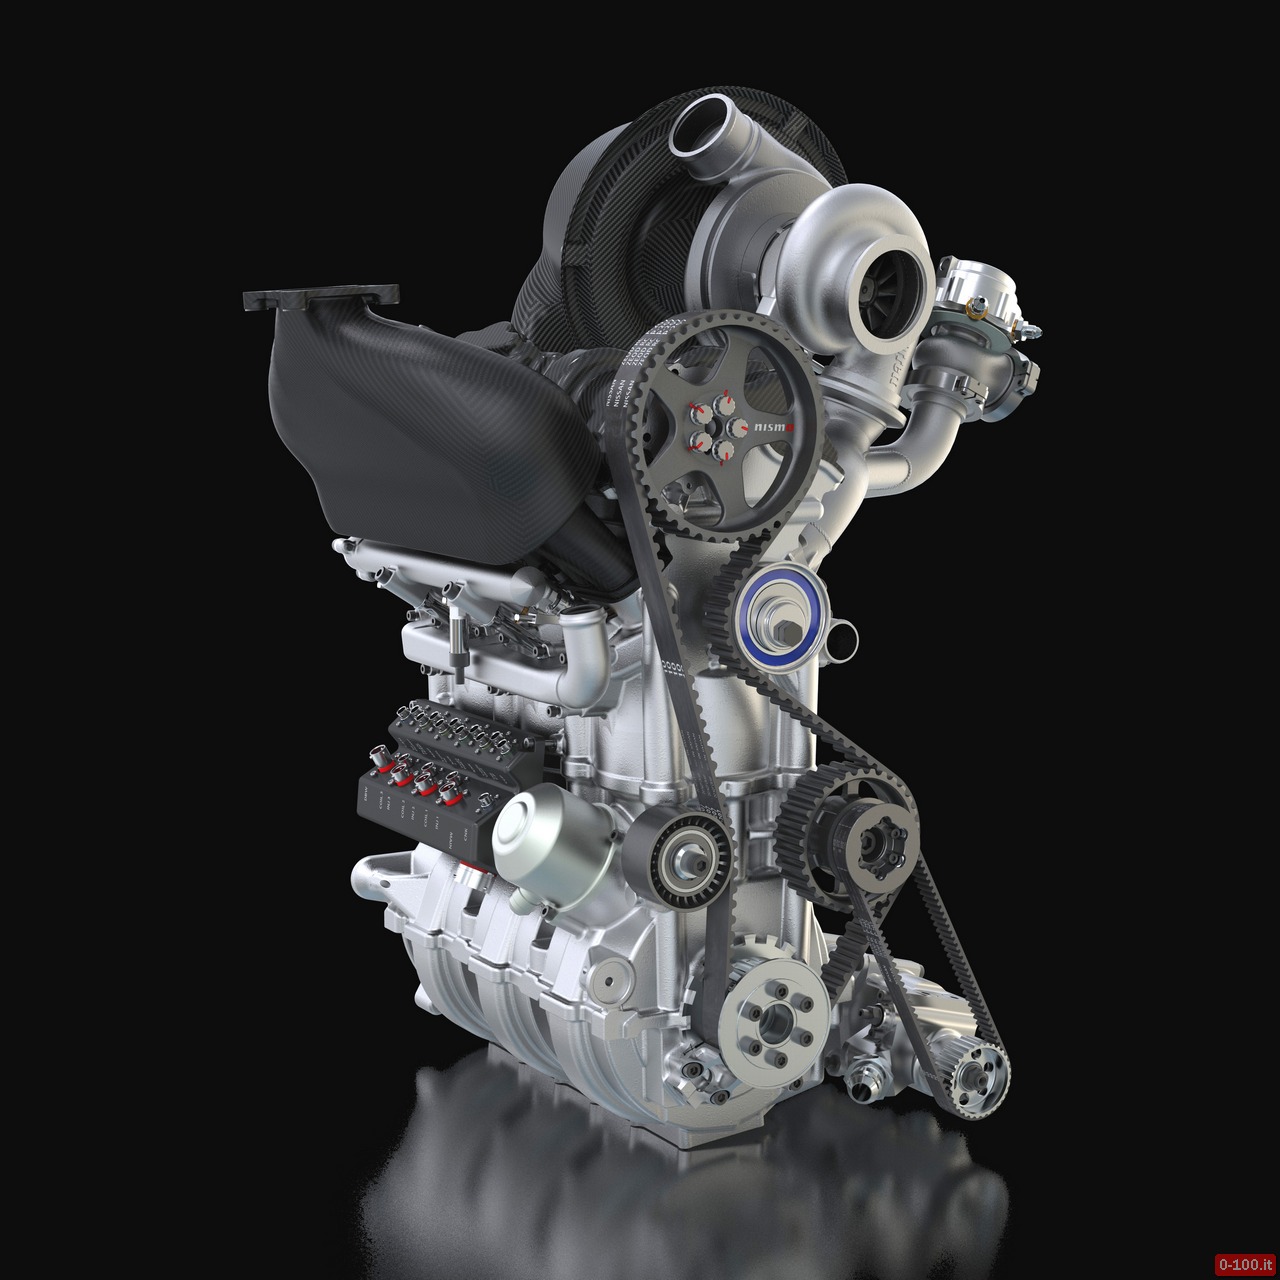 nissan-dig-t-r-1-5-3-cilindri-turbo-40-kg-400-hp-zeod-rc-le-mans-0-100_4